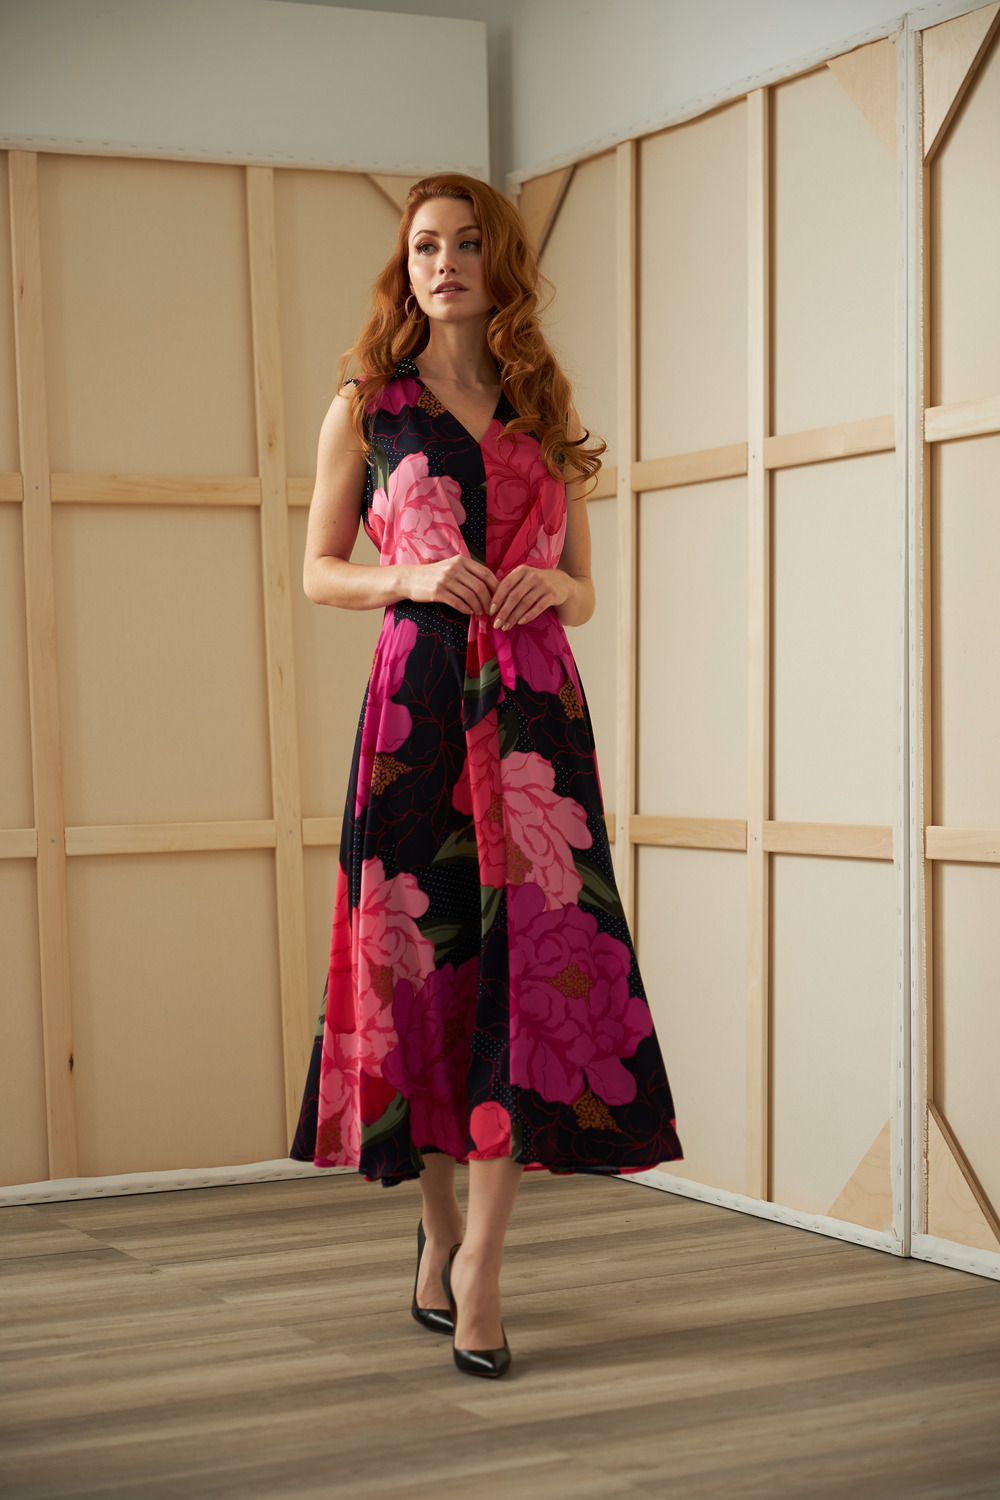 Joseph Ribkoff Floral & Polka Dot Dress Style 211279. Pink/multi